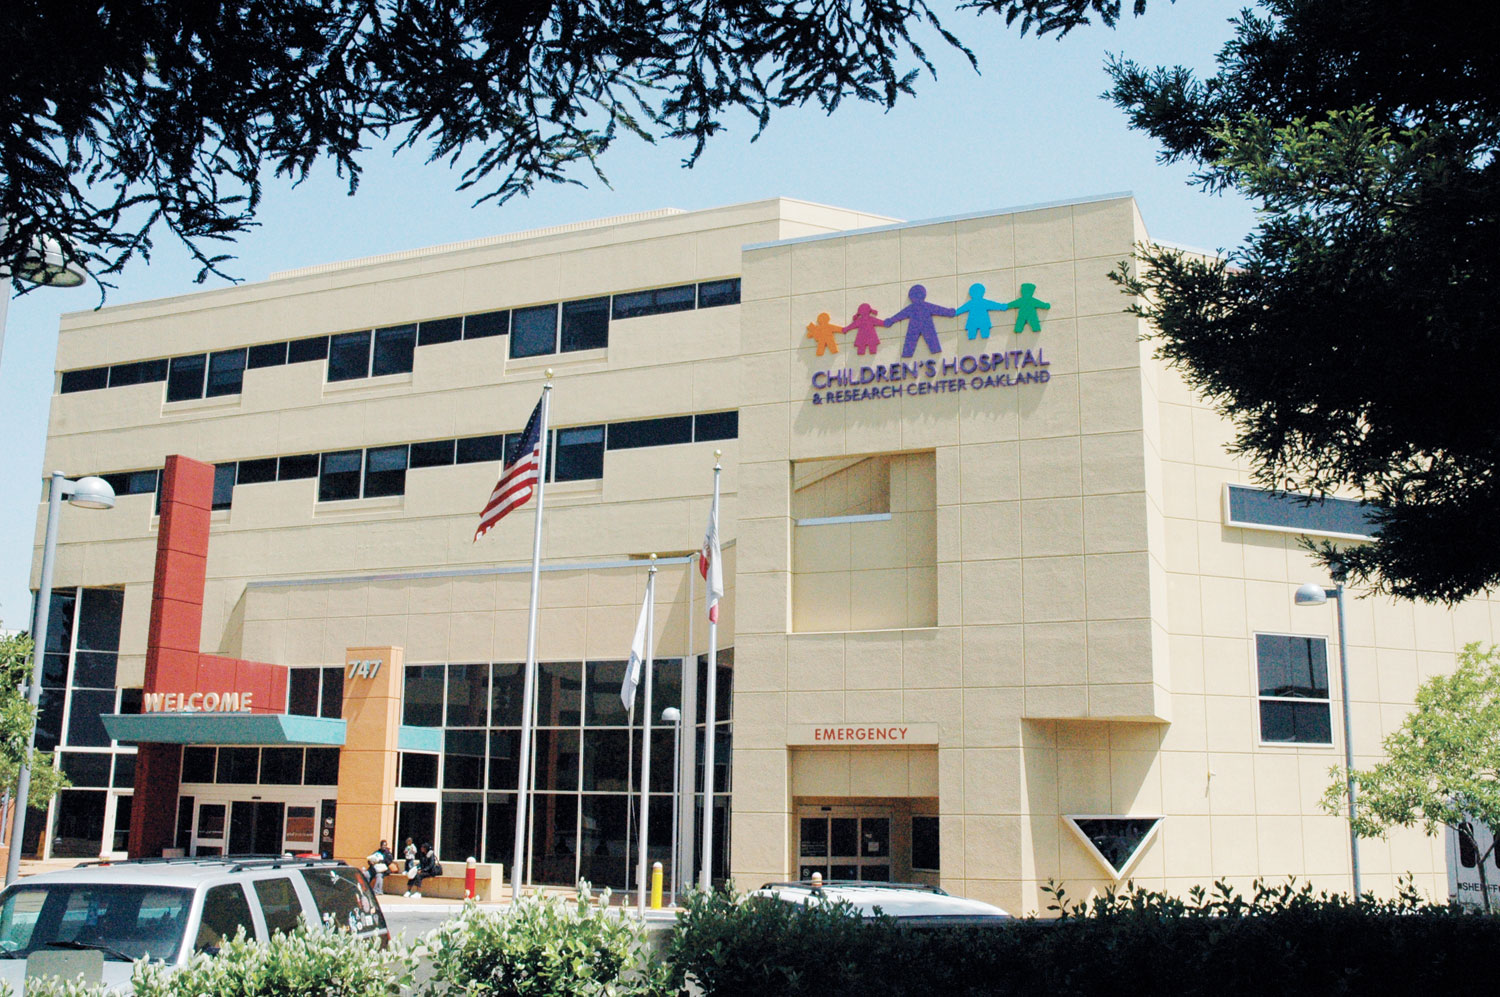 Exterior of UCSF Benioff Children's Hospital Oakland, the new name of Children's Hospital & Research Center Oakland